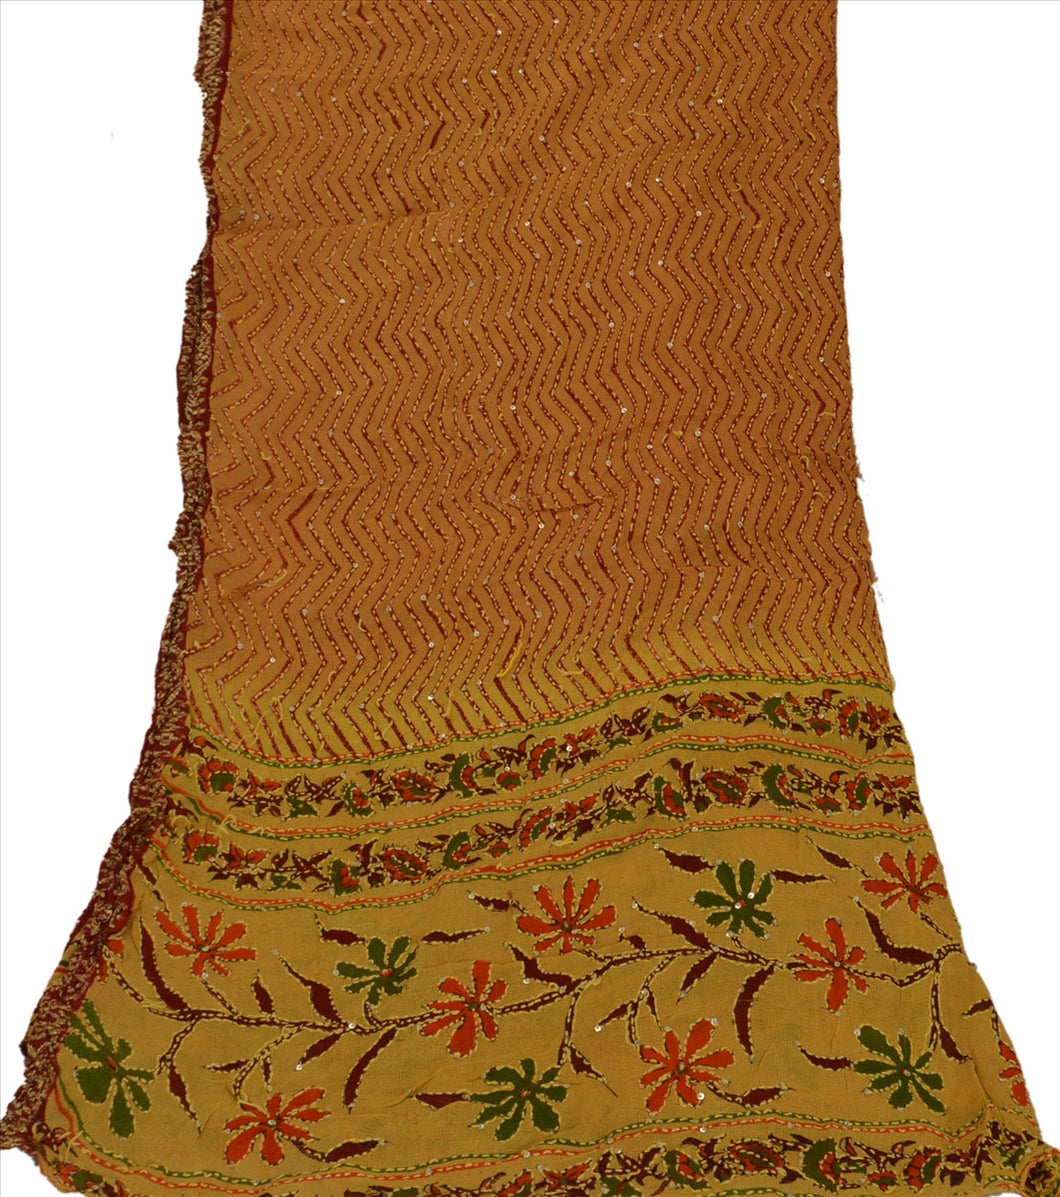 Vintage Dupatta Long Stole Cotton Cream Hand Embroidered Kantha Wrap Veil